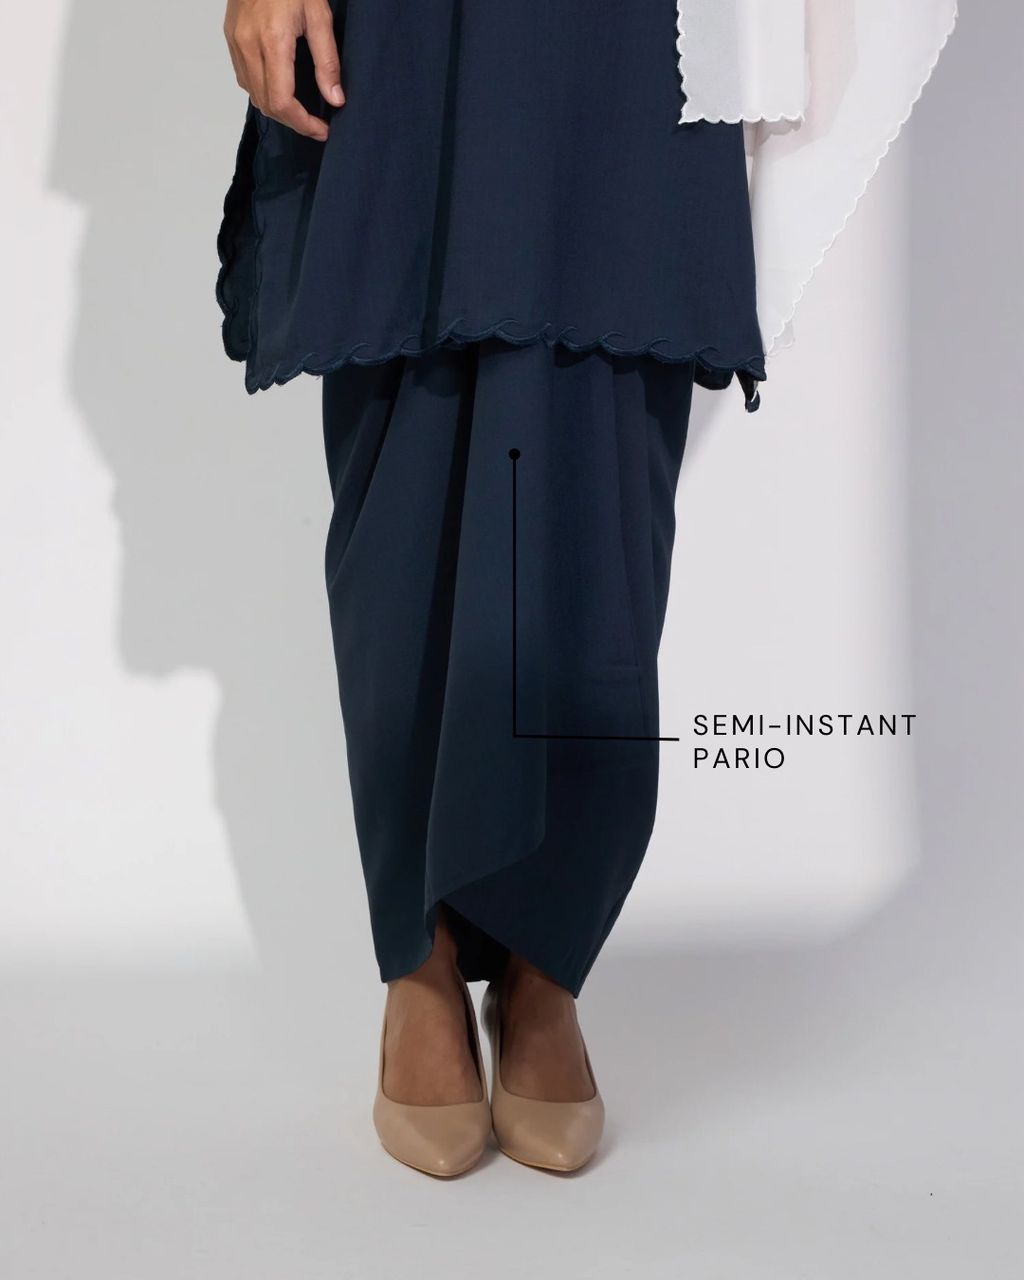 haura-wear-eidra-skirt-set-sulam-embroidery-pario-klasik-tradisional-mini kebaya-fabrik eyelet-raya-muslimah-long-sleeve-baju-skirt-kain-perempuan-baju-sepasang (25)